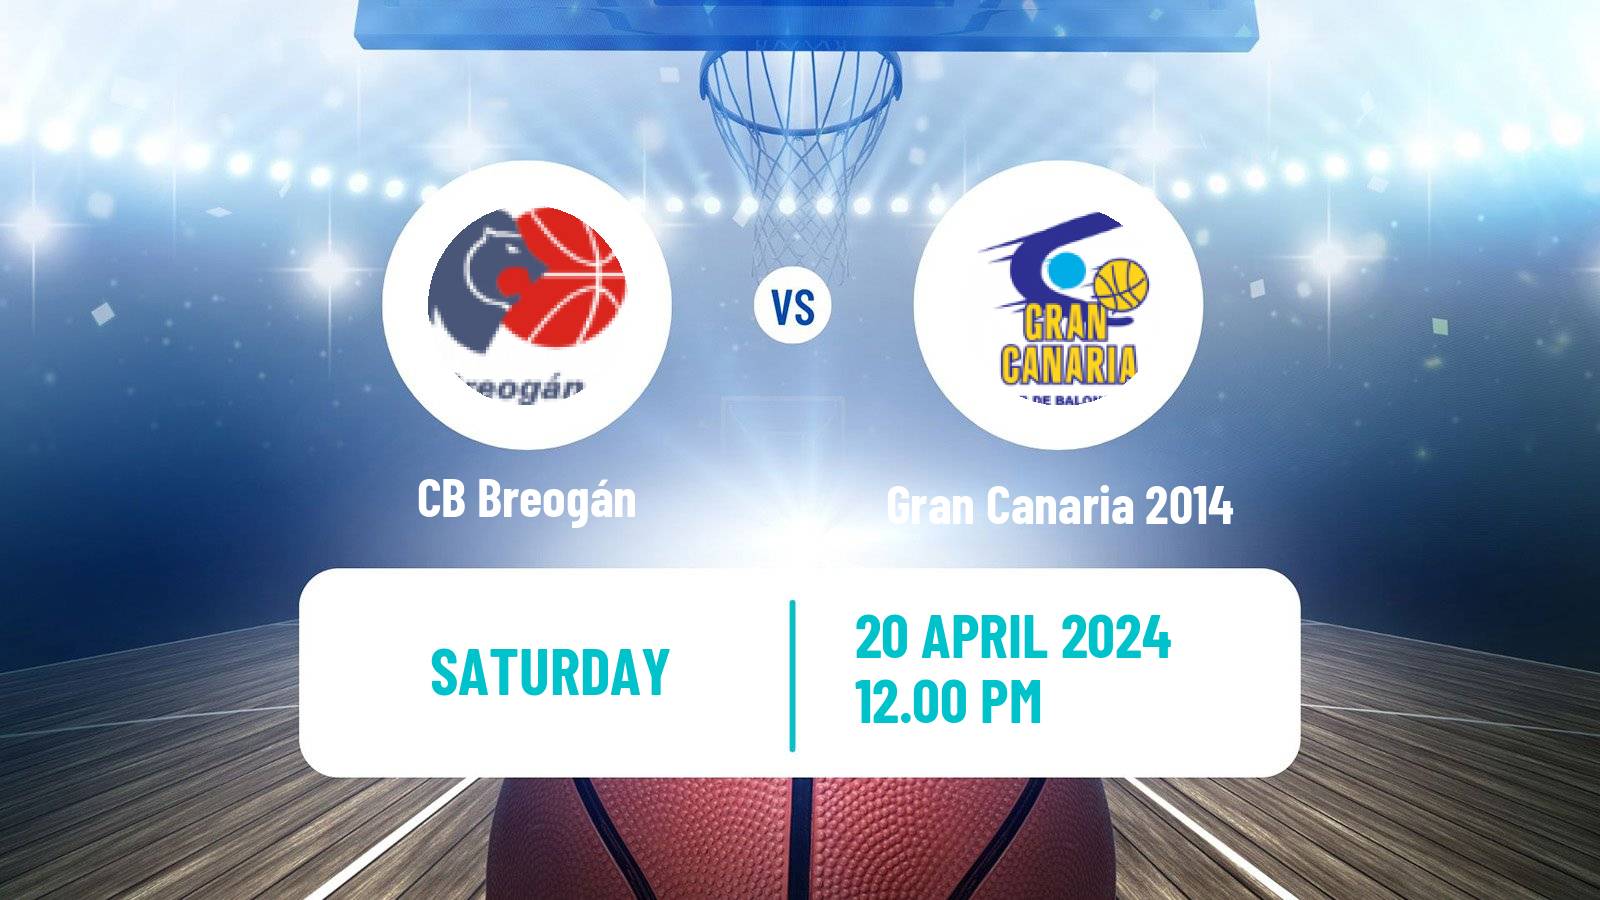 Basketball Spanish ACB League CB Breogán - Gran Canaria 2014